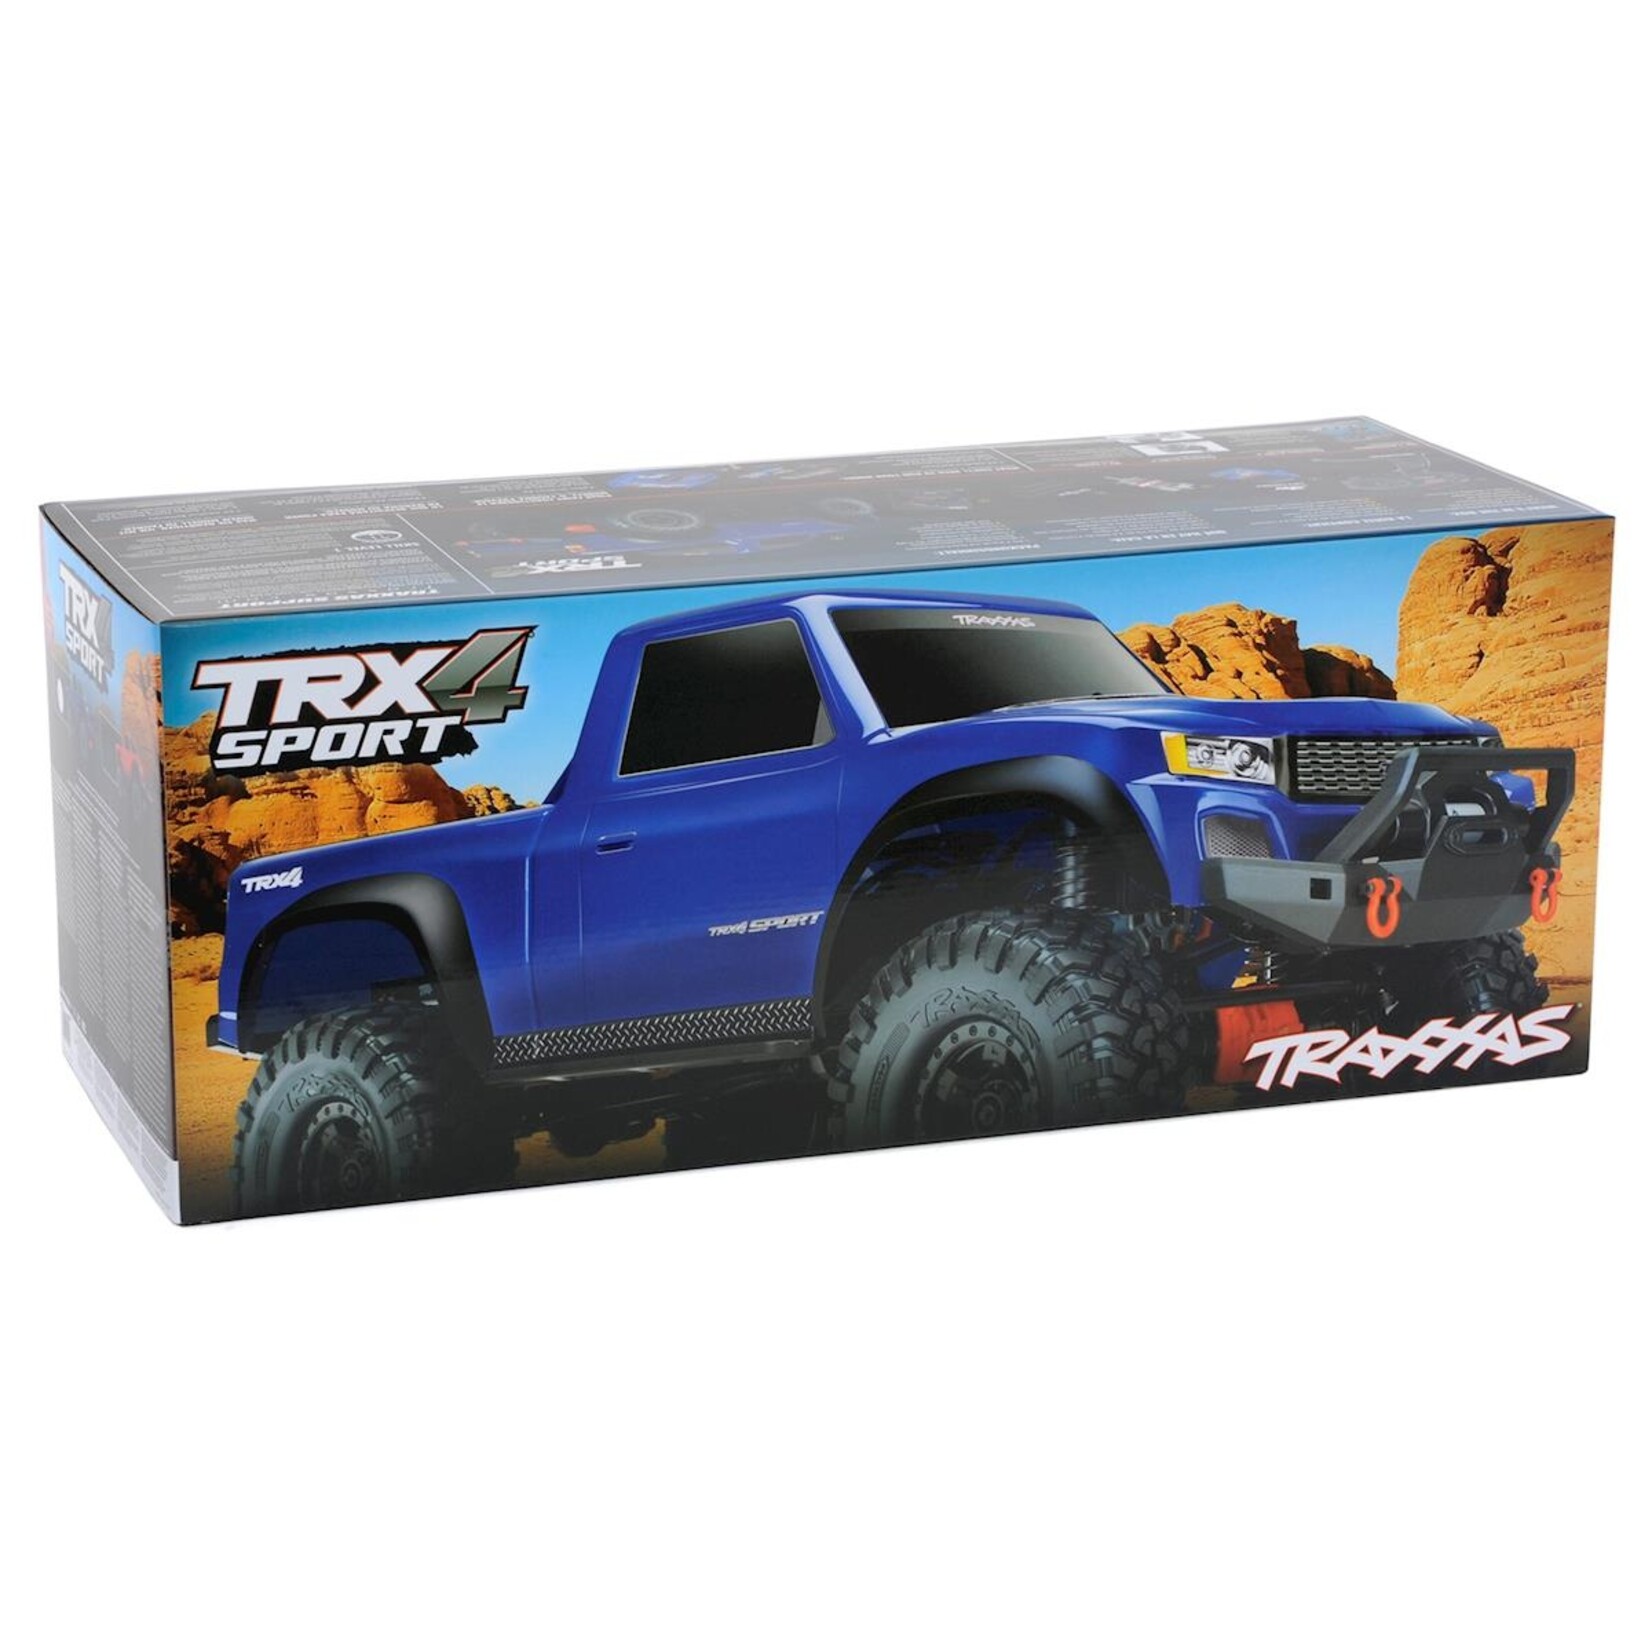 Traxxas Traxxas TRX-4 Sport 1/10 Scale Trail Rock Crawler (Red) w/XL-5 HV ESC & TQ 2.4GHz Radio #82024-4-RED